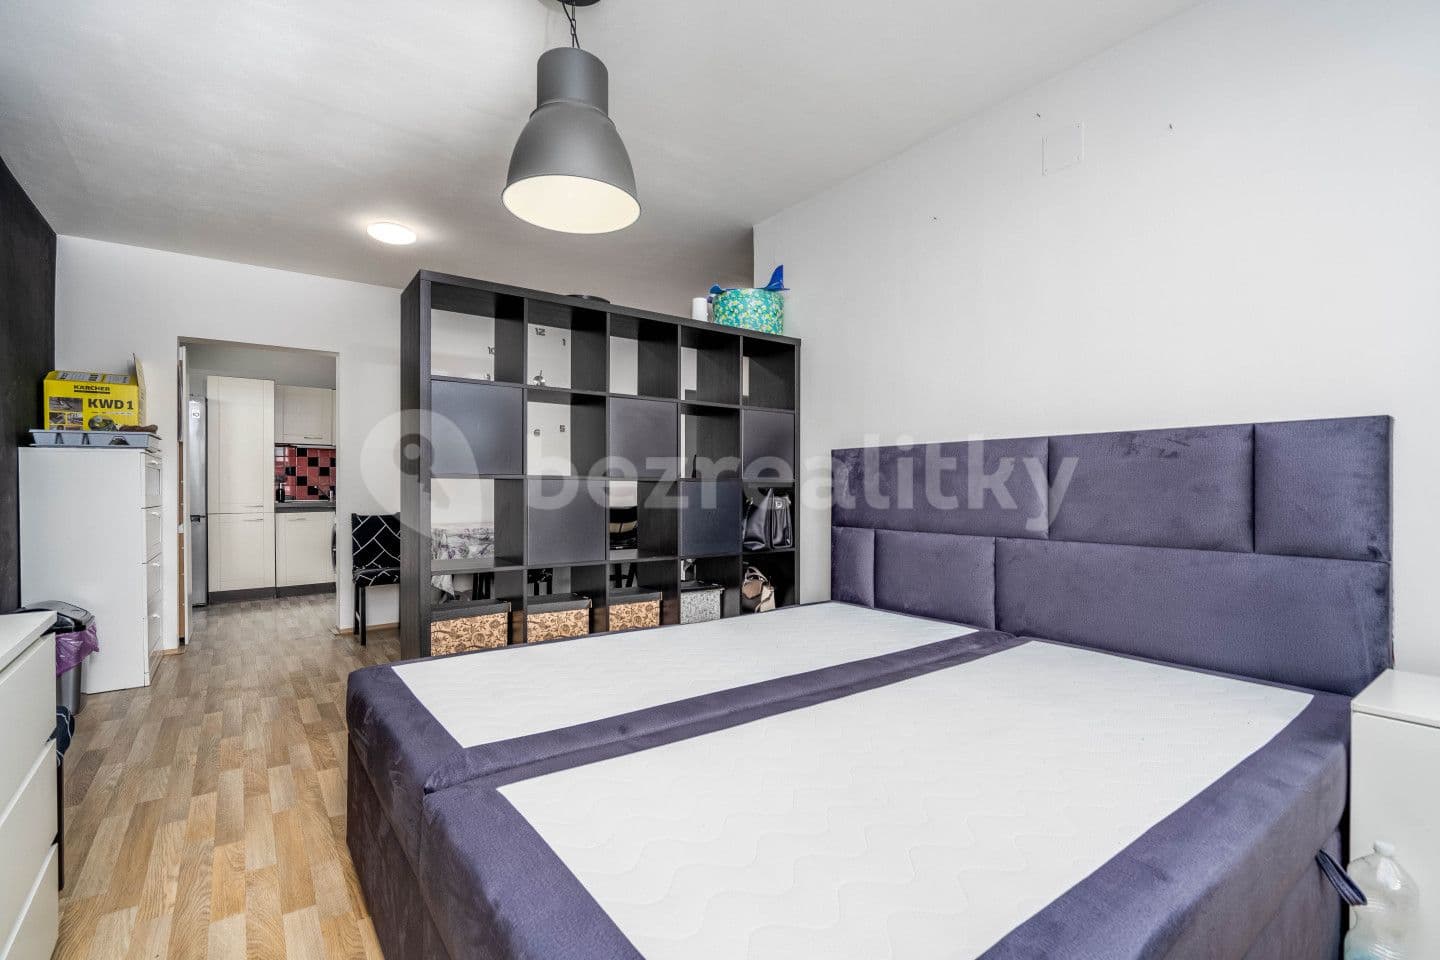 Predaj bytu 3-izbový 96 m², Letců R. A. F., Nymburk, Středočeský kraj